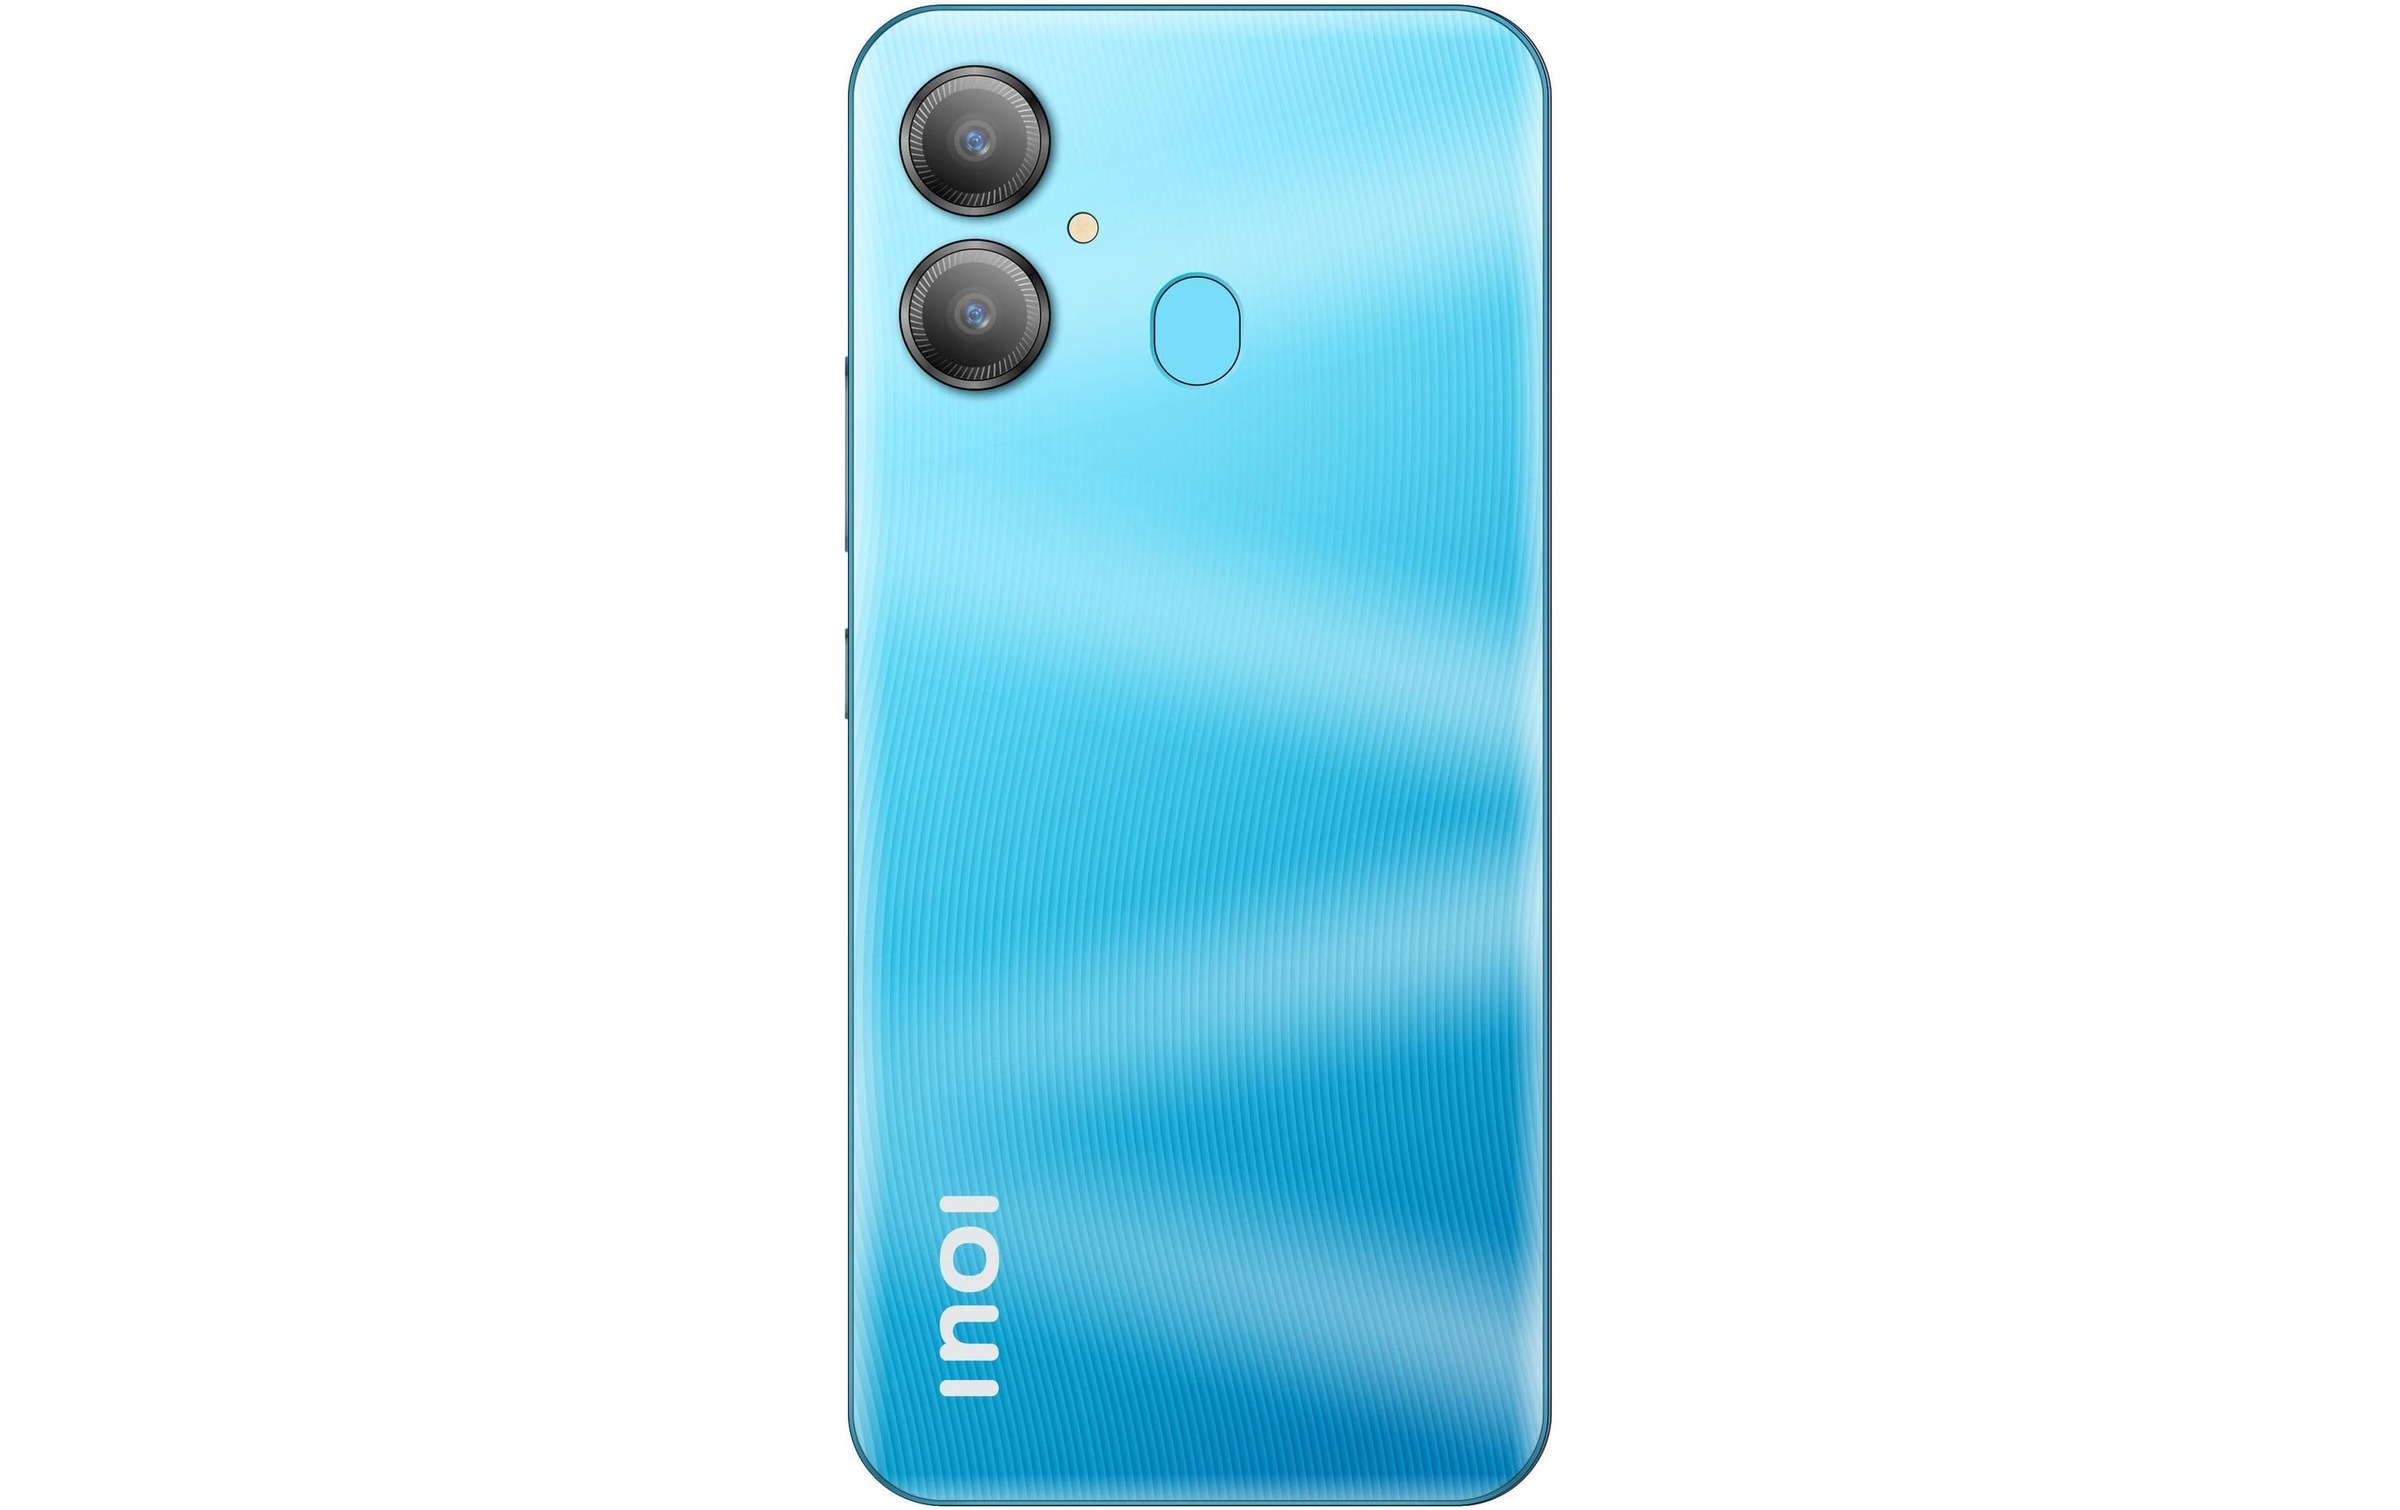 Smartphone »INOI A63 32GB Marine blau«, Blau, 16,44 cm/6,5 Zoll, 32 GB Speicherplatz, 13 MP Kamera